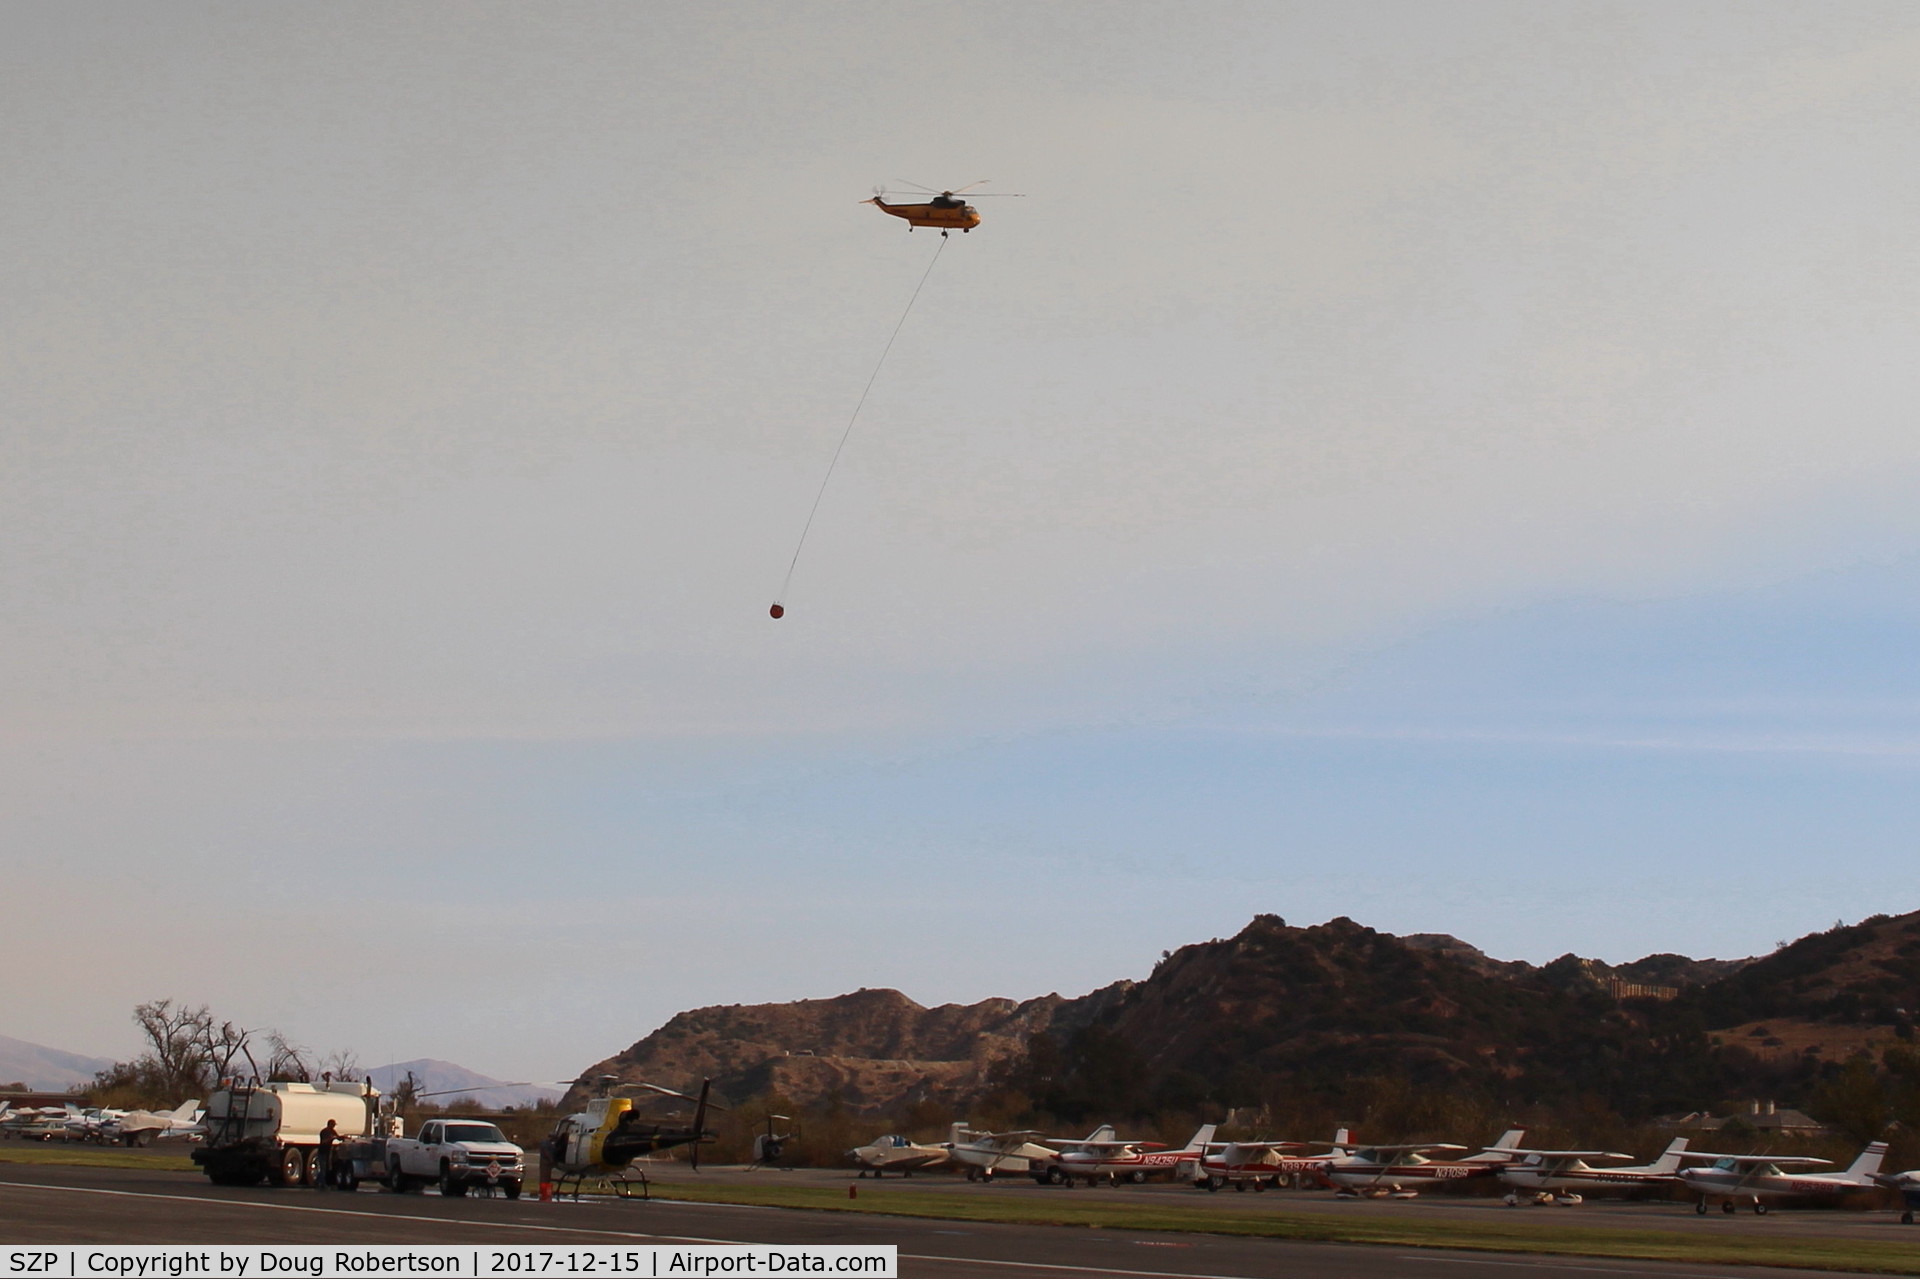 Santa Paula Airport (SZP) - CROMAN helicopter with PHOS-CHEK sling load departing SZP FireBase, note smoky sky